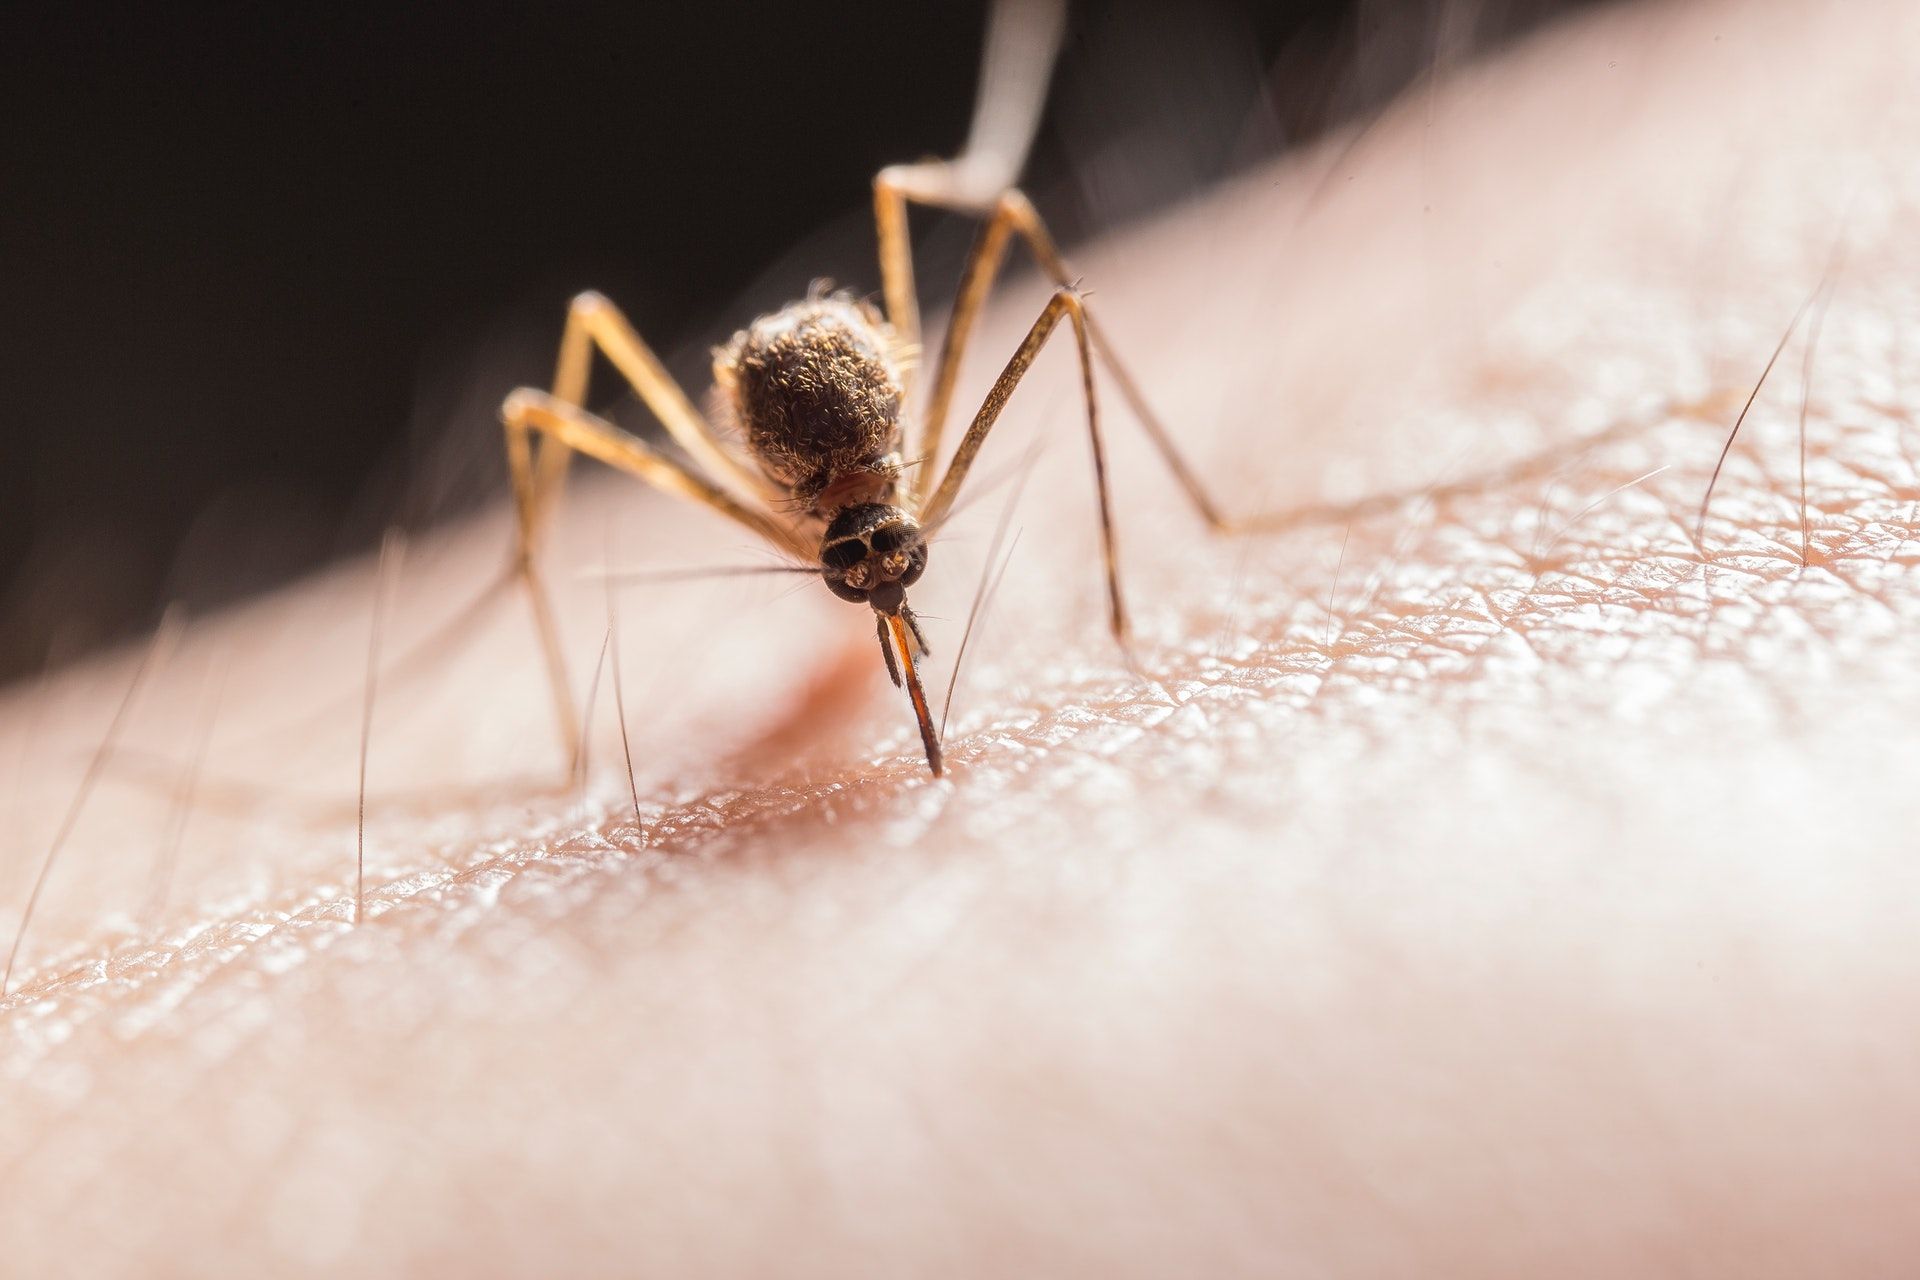 mosquito treatment services in atlanta